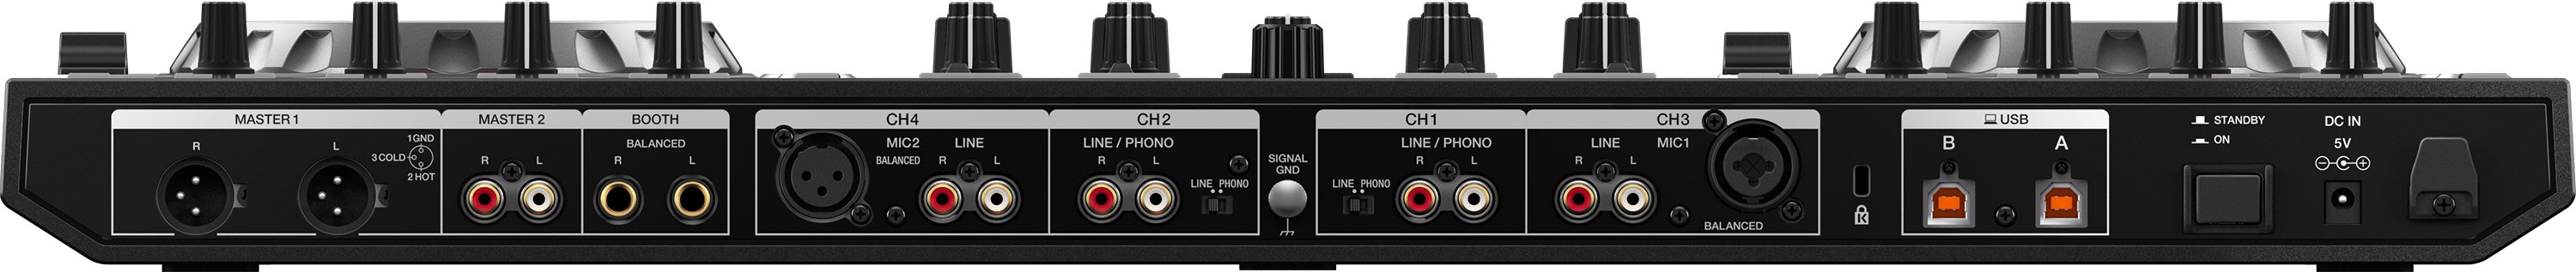 Pioneer Dj Ddj-sx3 - Controlador DJ USB - Variation 3